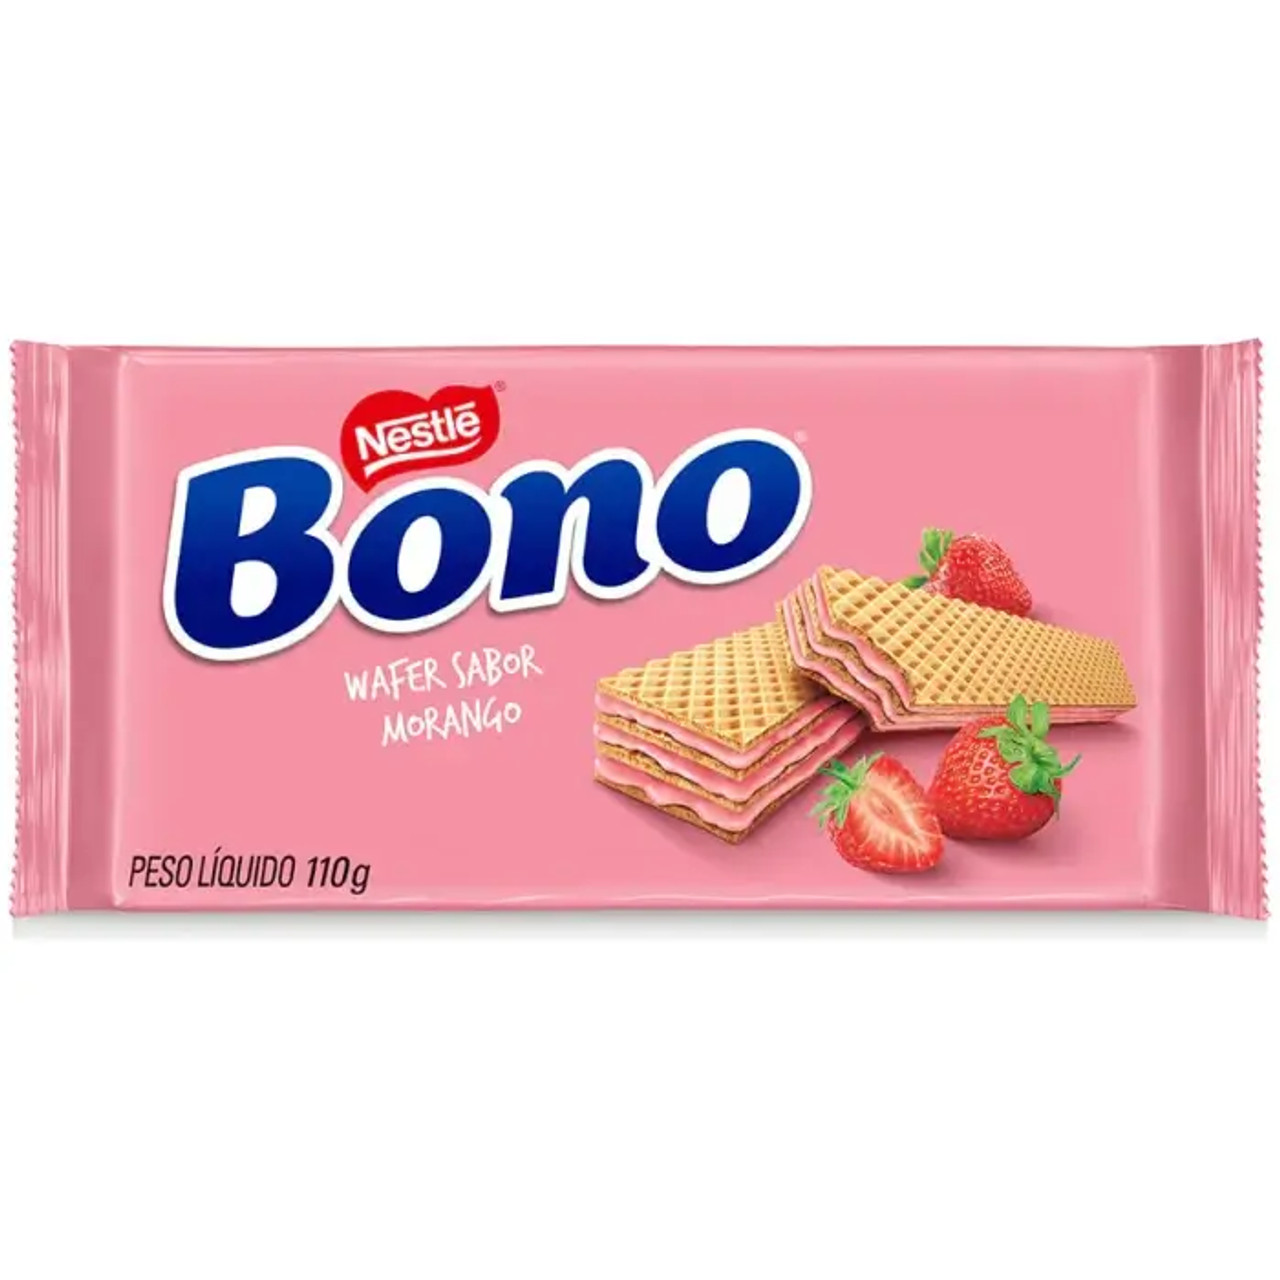 NESTLE Bono Strawberry Wafer Half-Box 24-CASE - 110g | Crispy Wafer Delights - Chicken Pieces